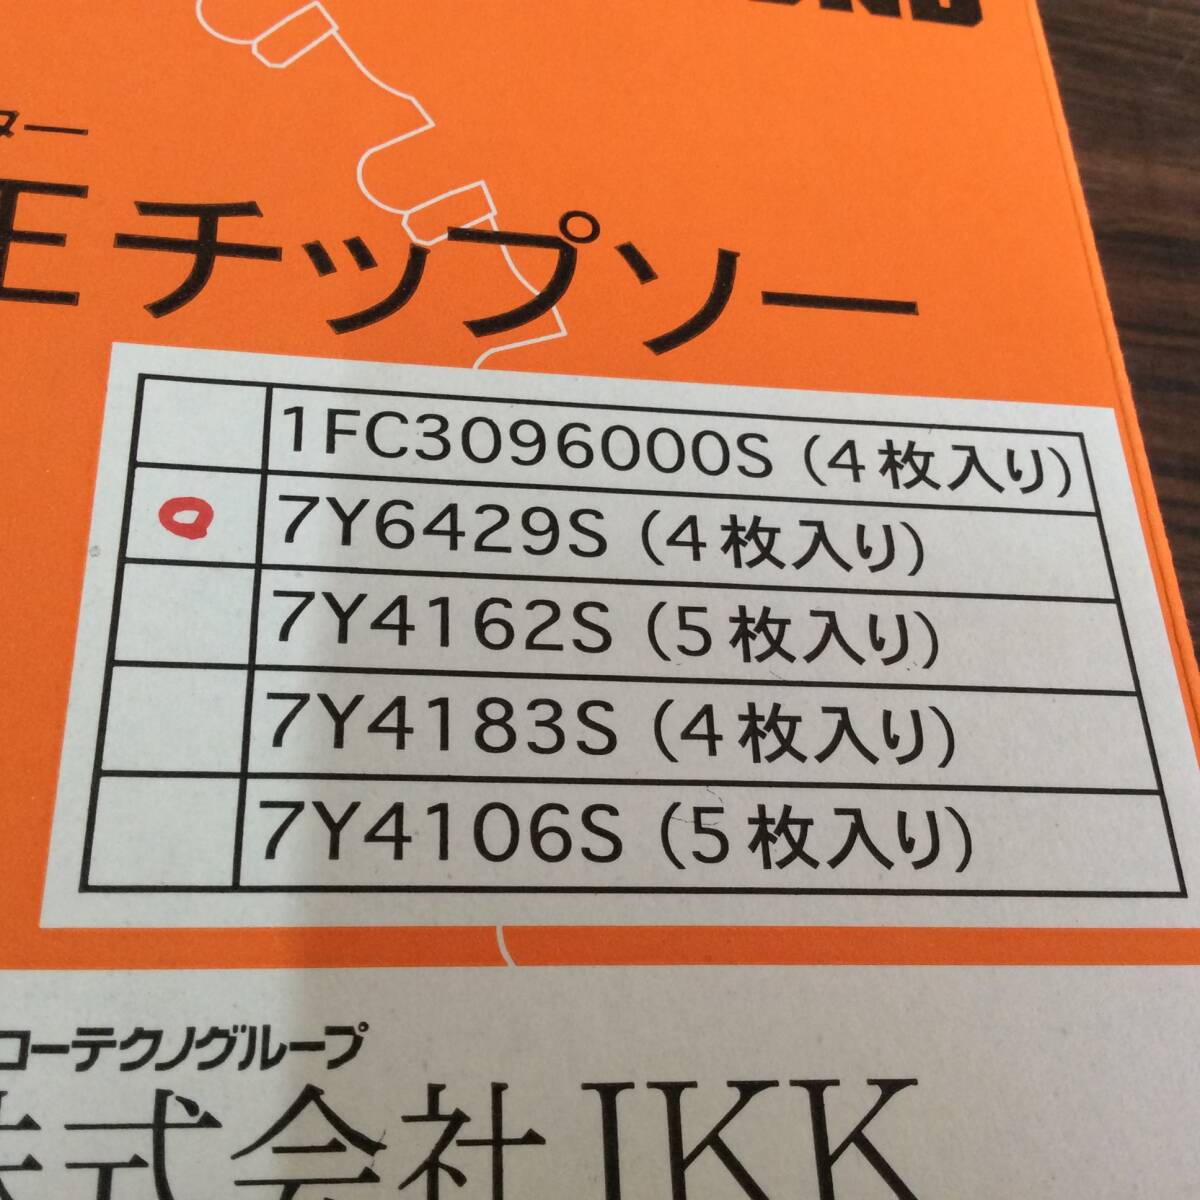 【TH-1974】未使用 IKK DIAMOND サンコーテクノ チップソーカッター純正チップソー 7Y6429S 4枚入_画像2